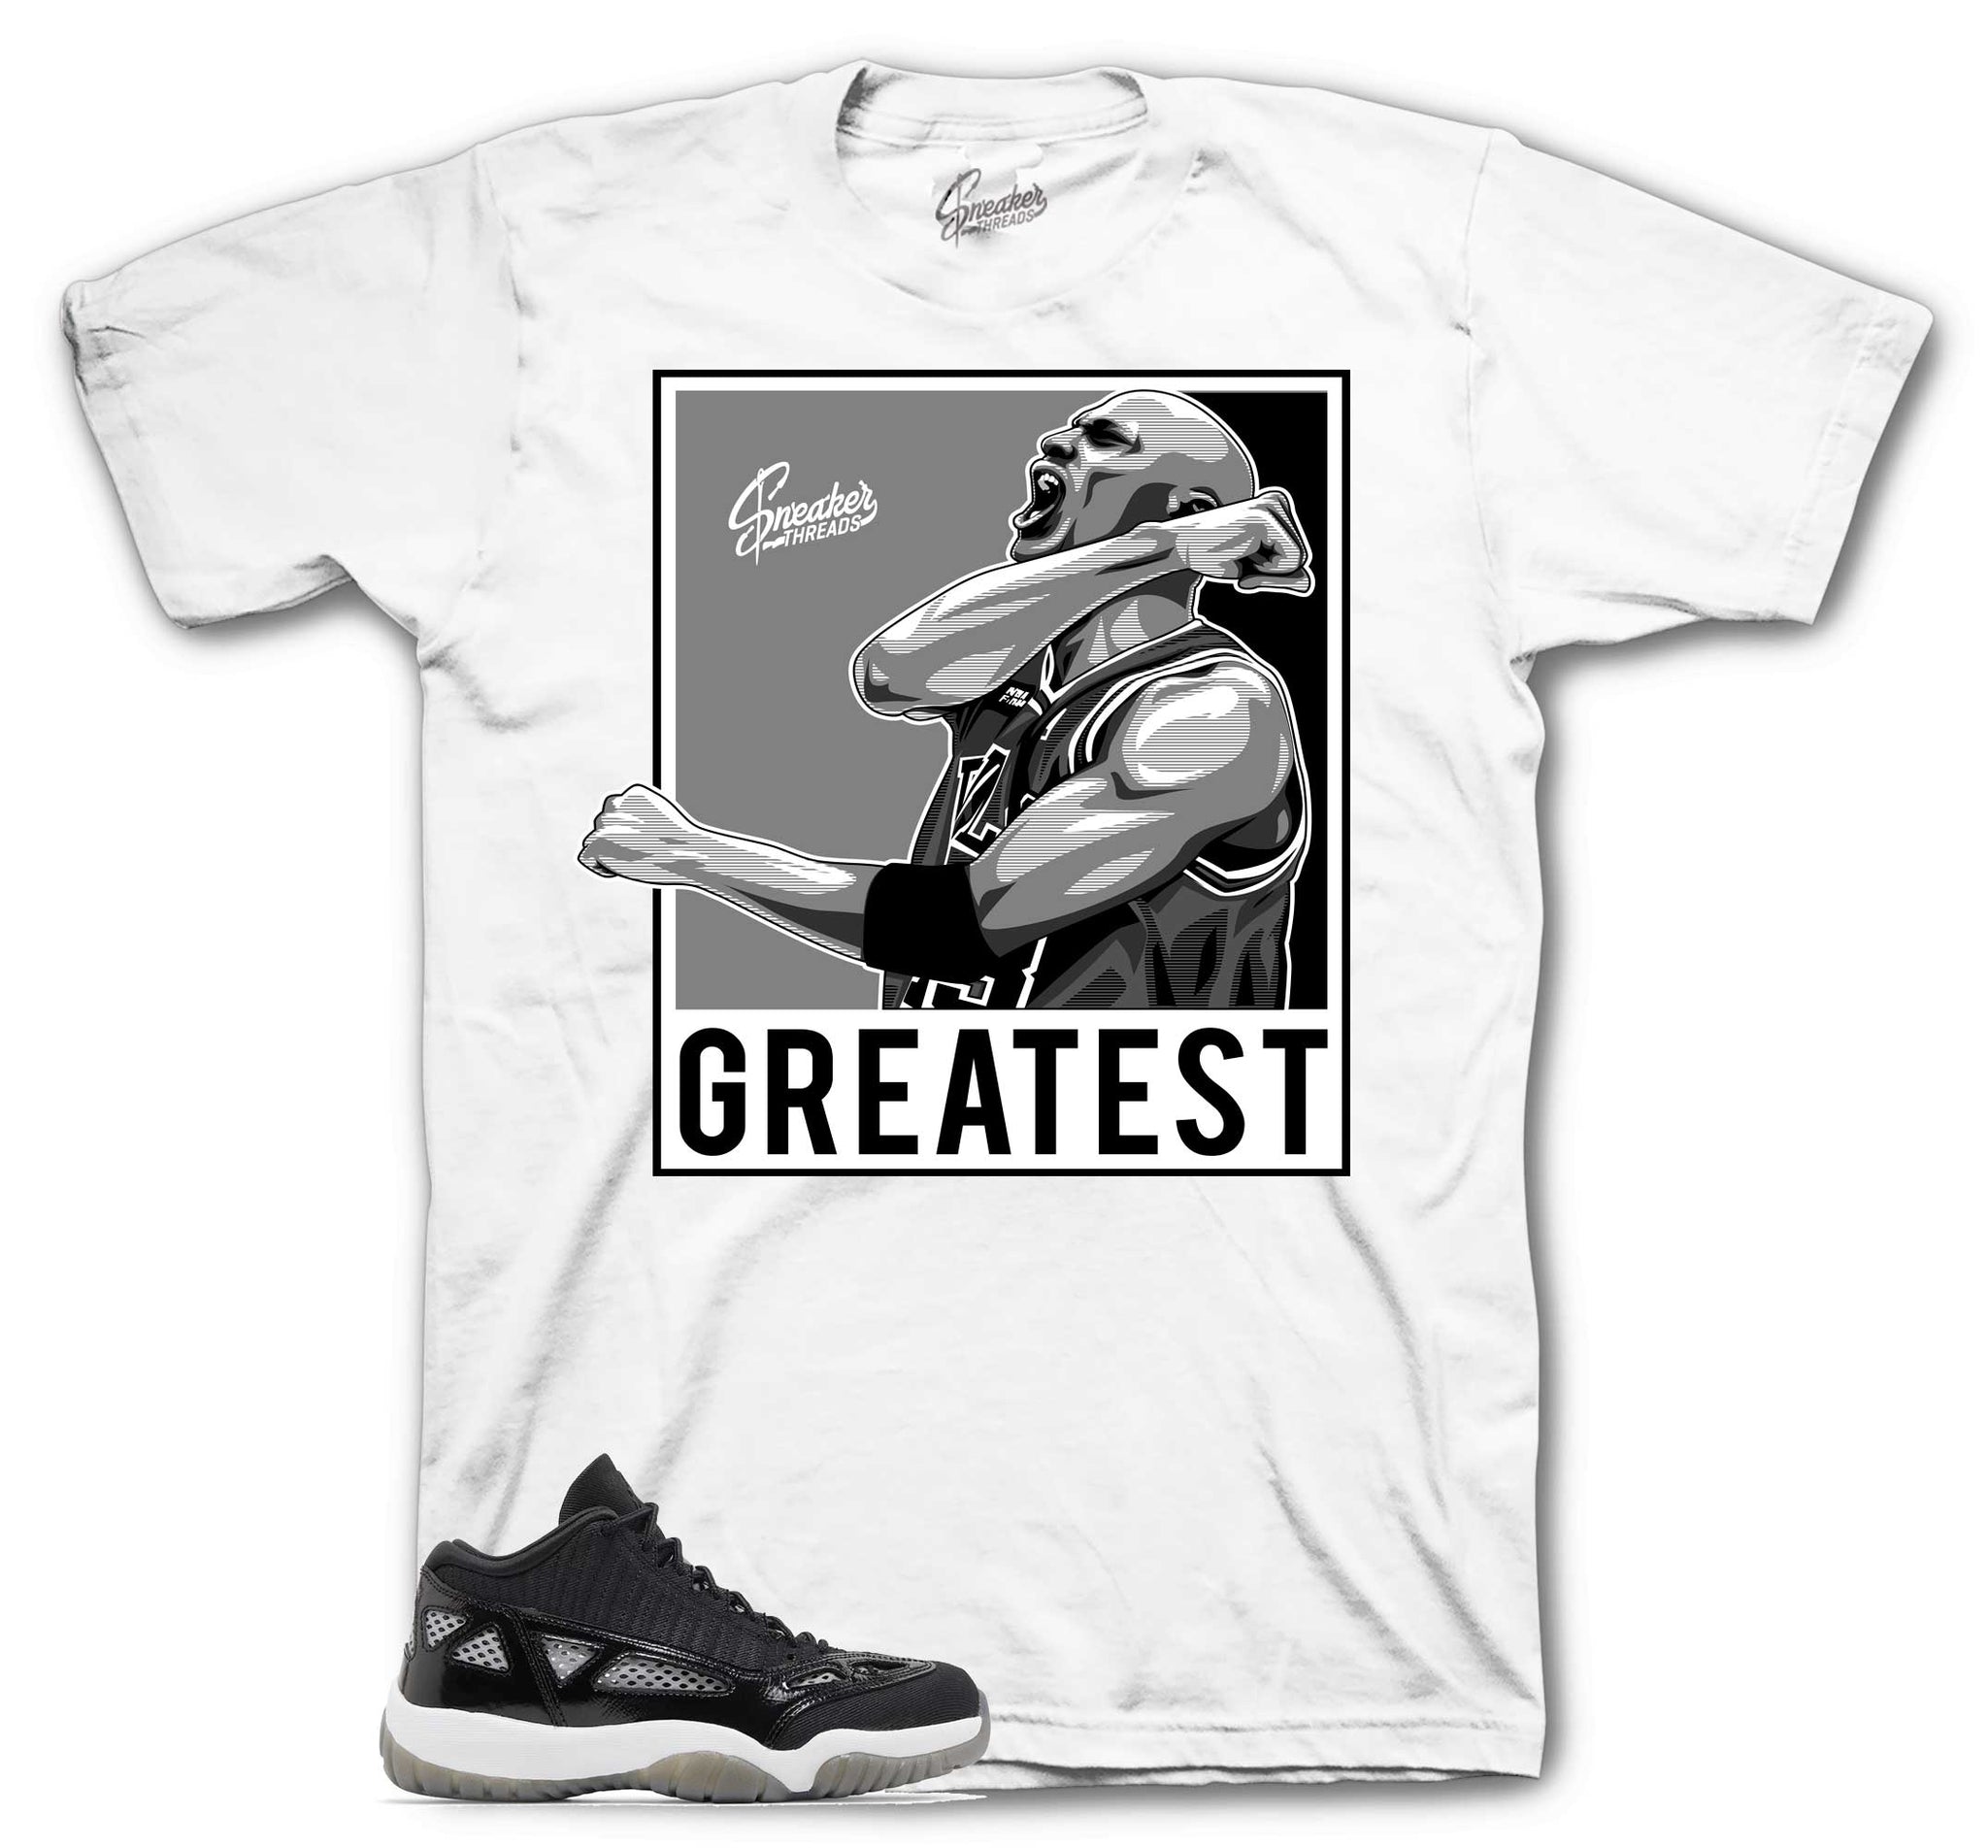 Retro 11 Craft Shirt - Greatest - White